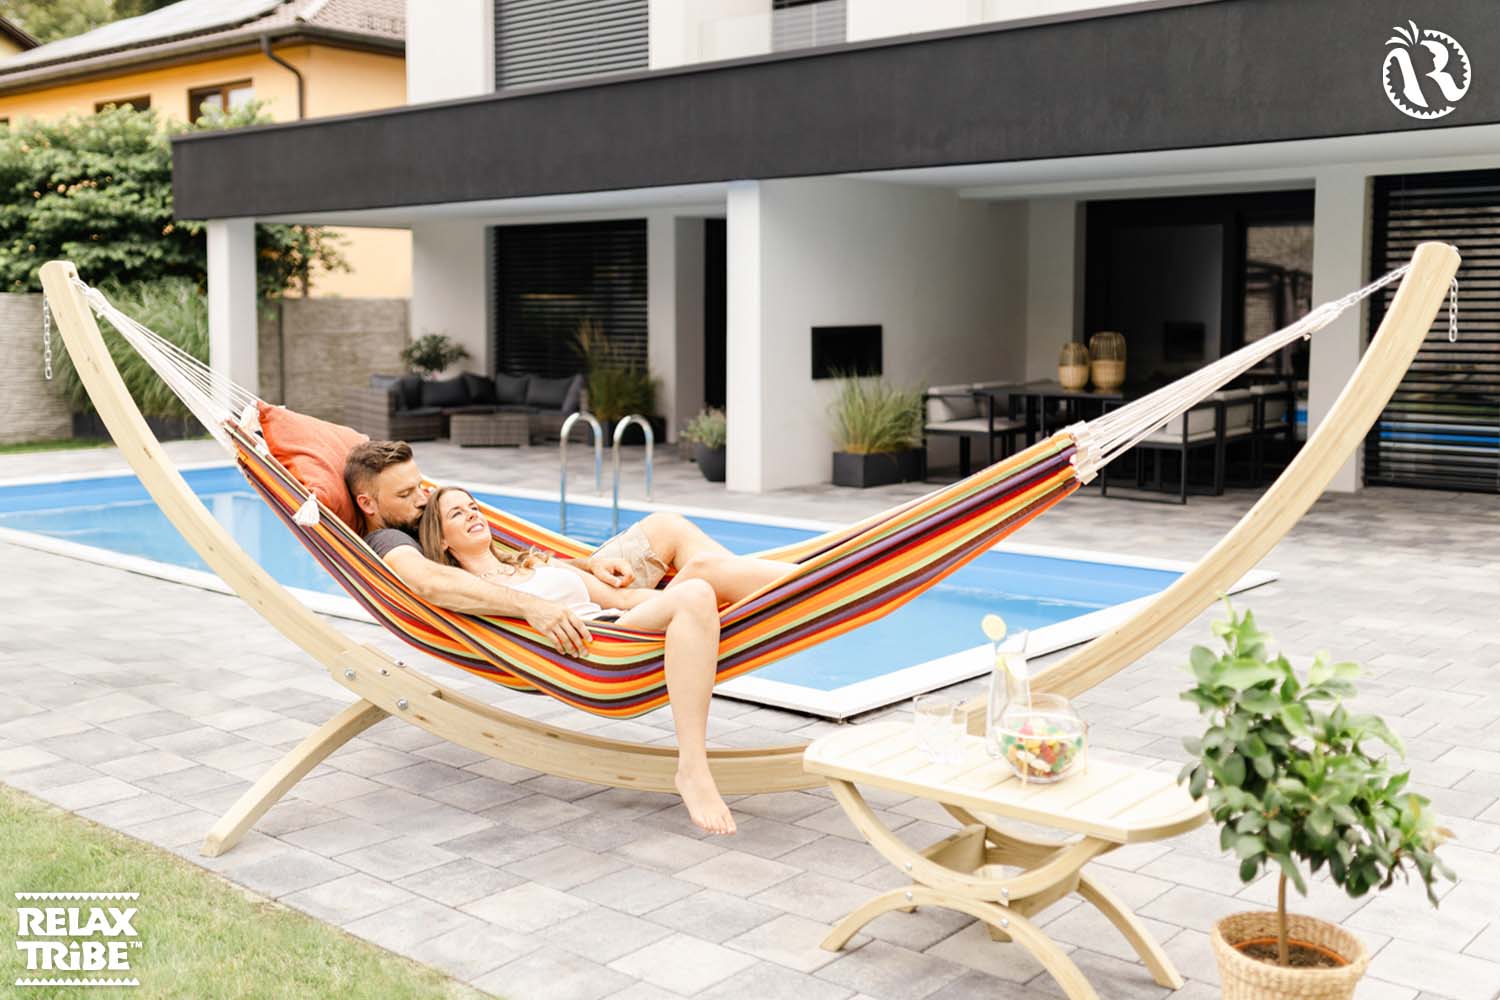 paradiso-tropical-family-xxl-brazilian-hammock-handmade-multicolor-patio-pool-wood-stand